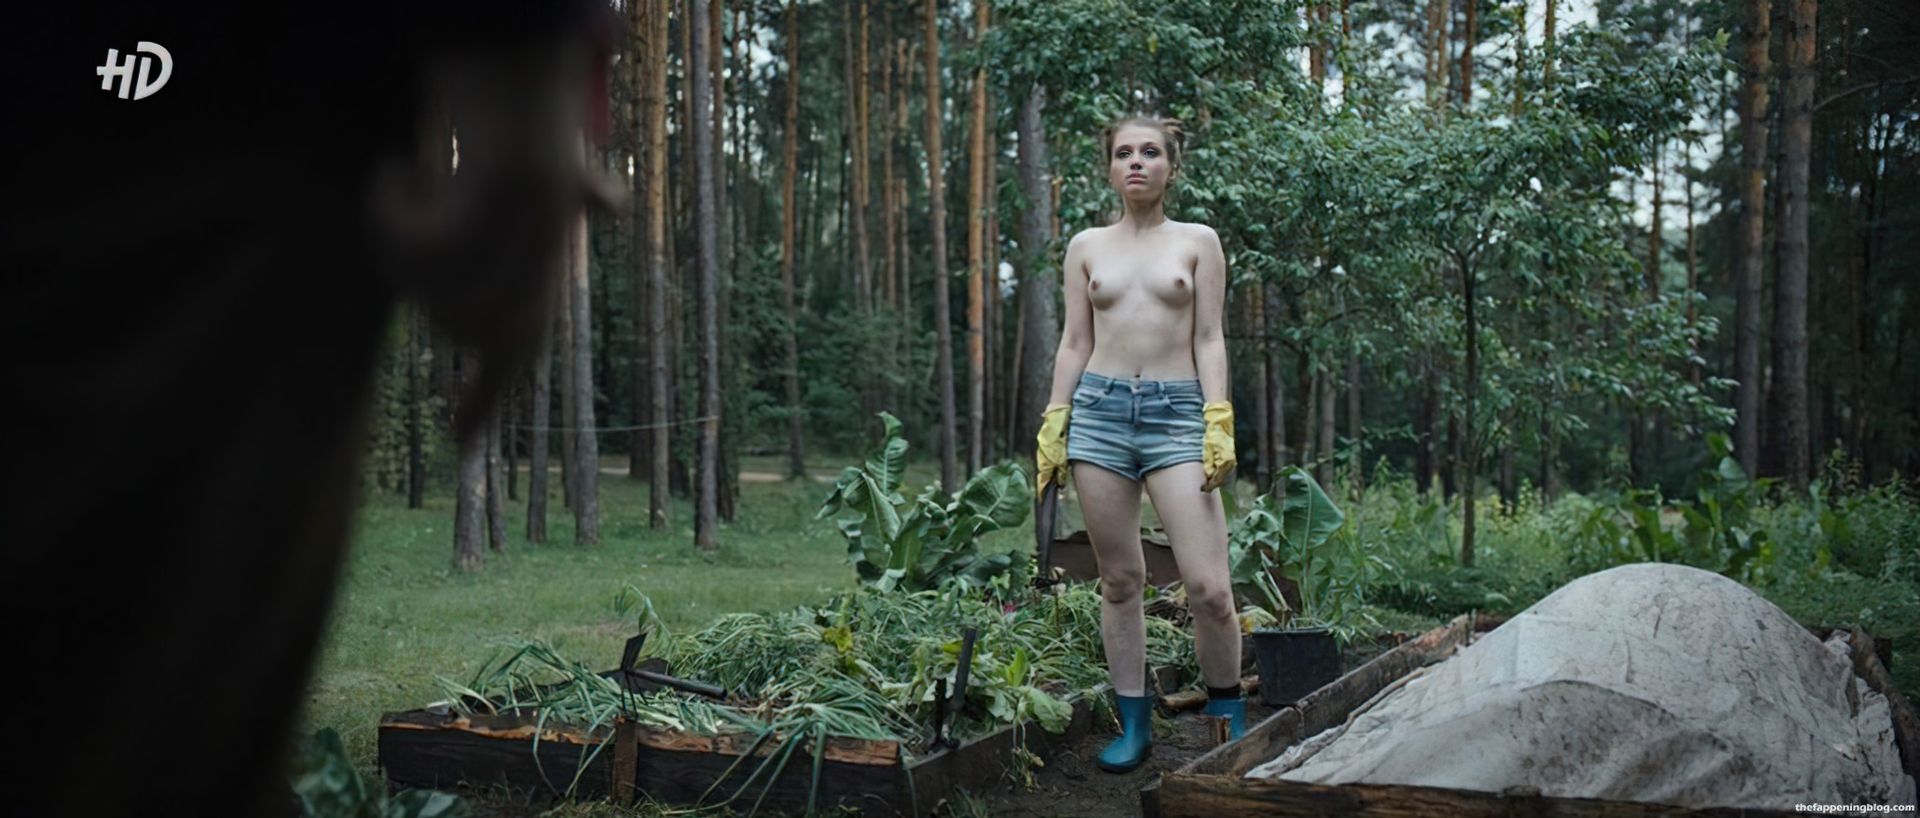 Veronika Mokhireva Nude  - Topi (13 Pics + Videos)